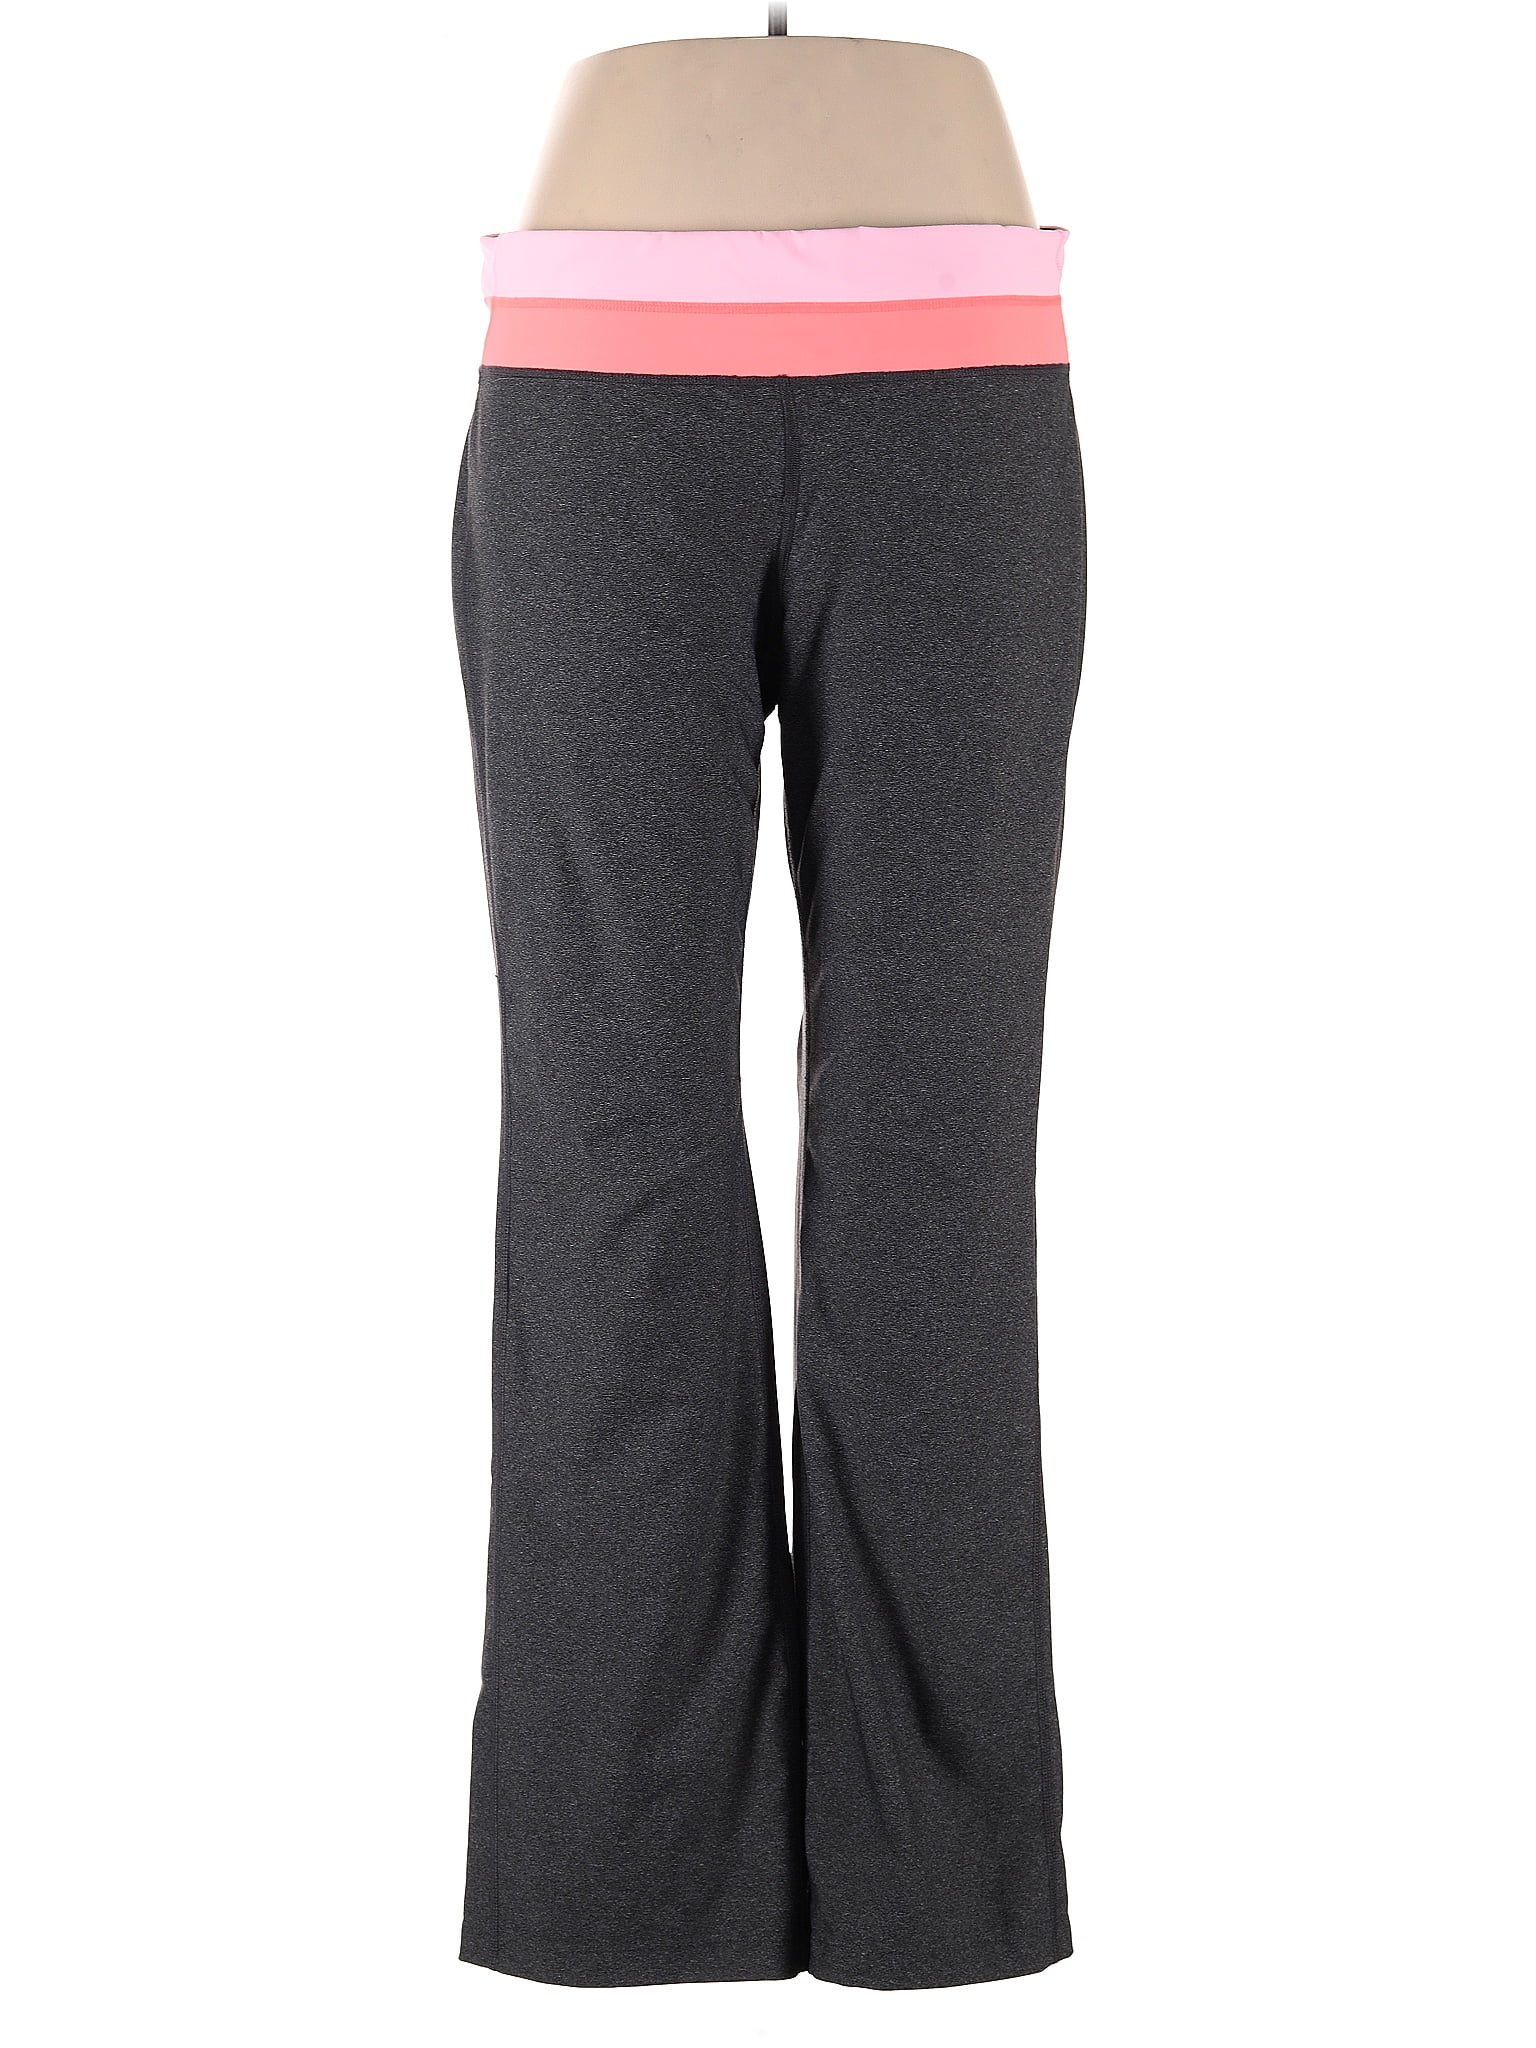 Xersion Gray Yoga Pants Size XL - 48% off